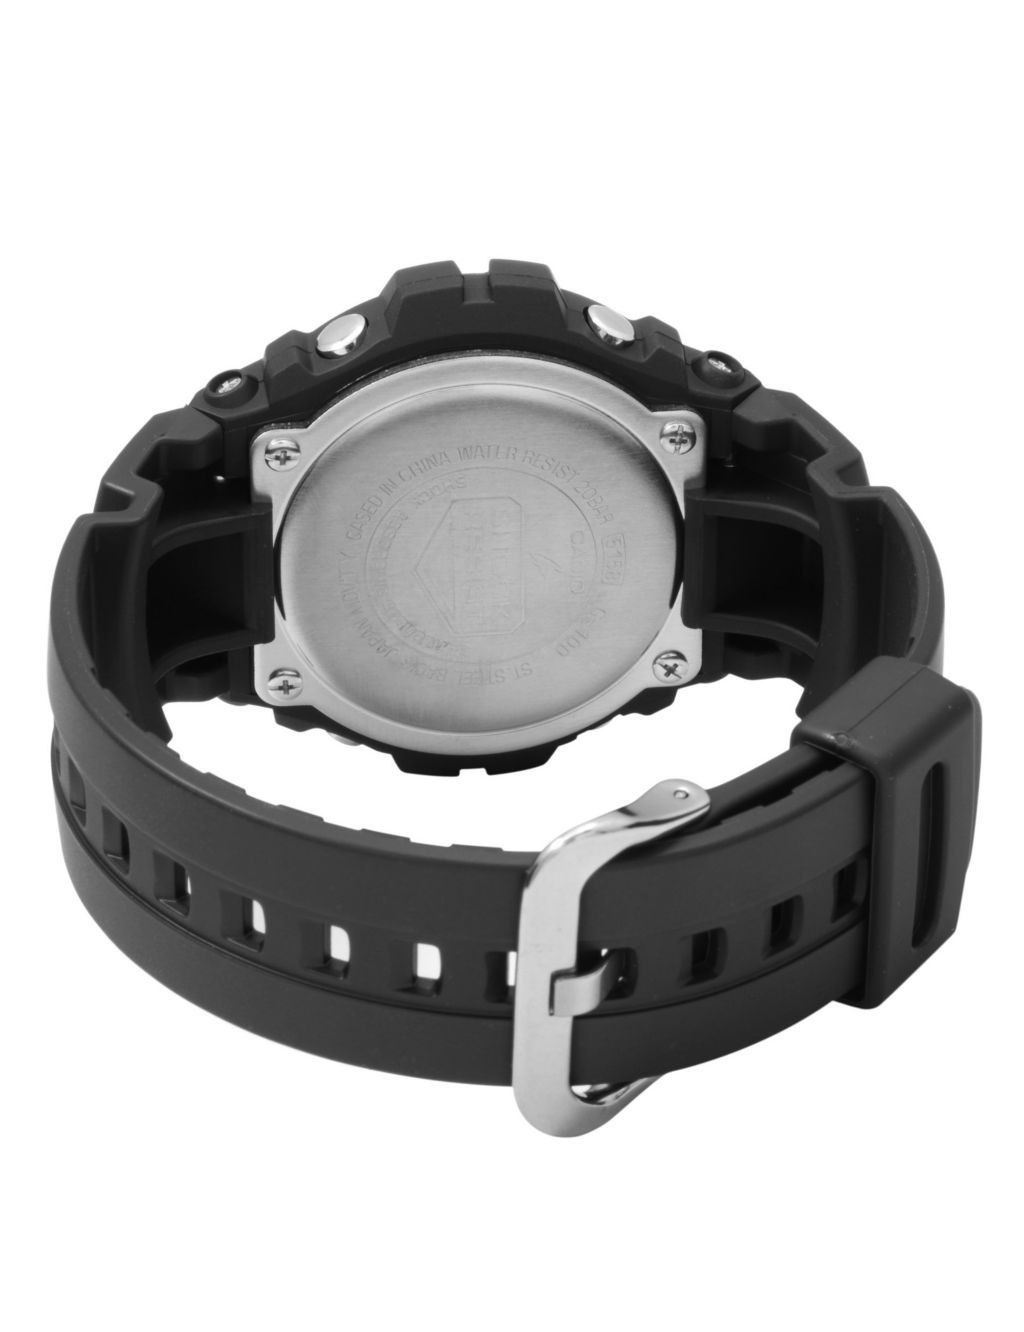 Casio G-Shock Alarm Chronograph Black Watch image 3